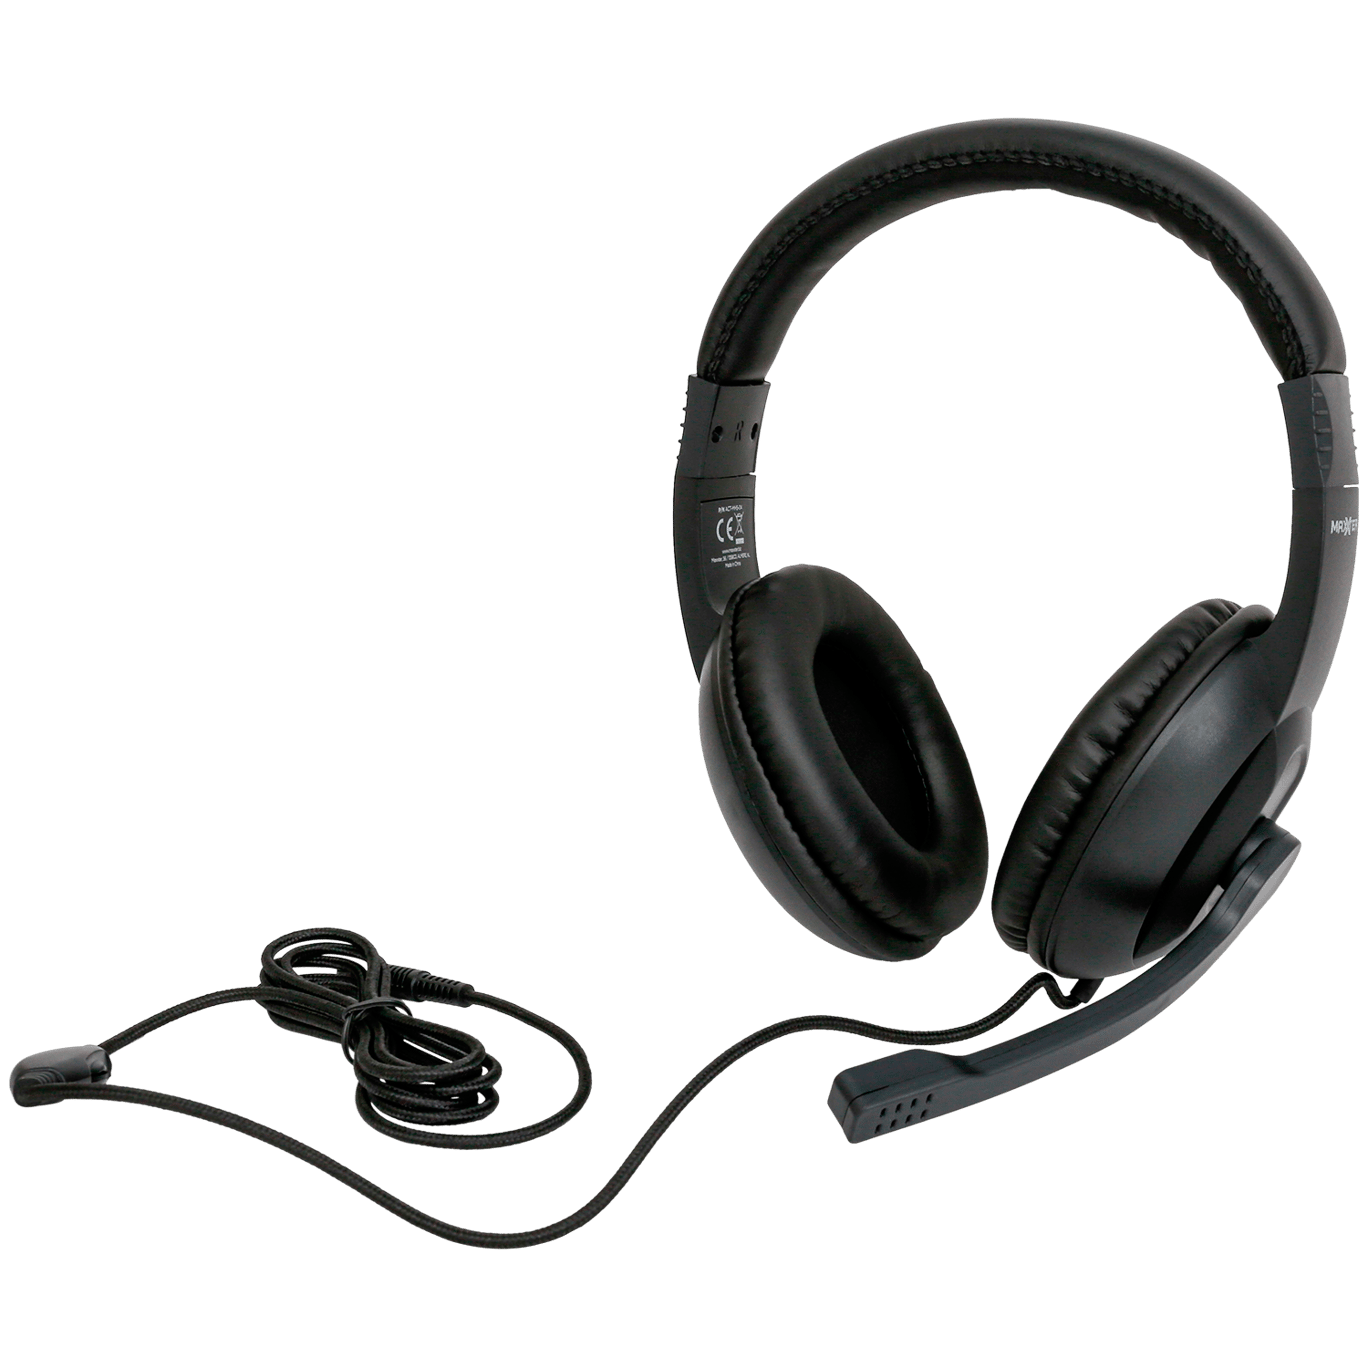 uitvegen Verbanning Slaapkamer Maxxter stereo headset | Action.com